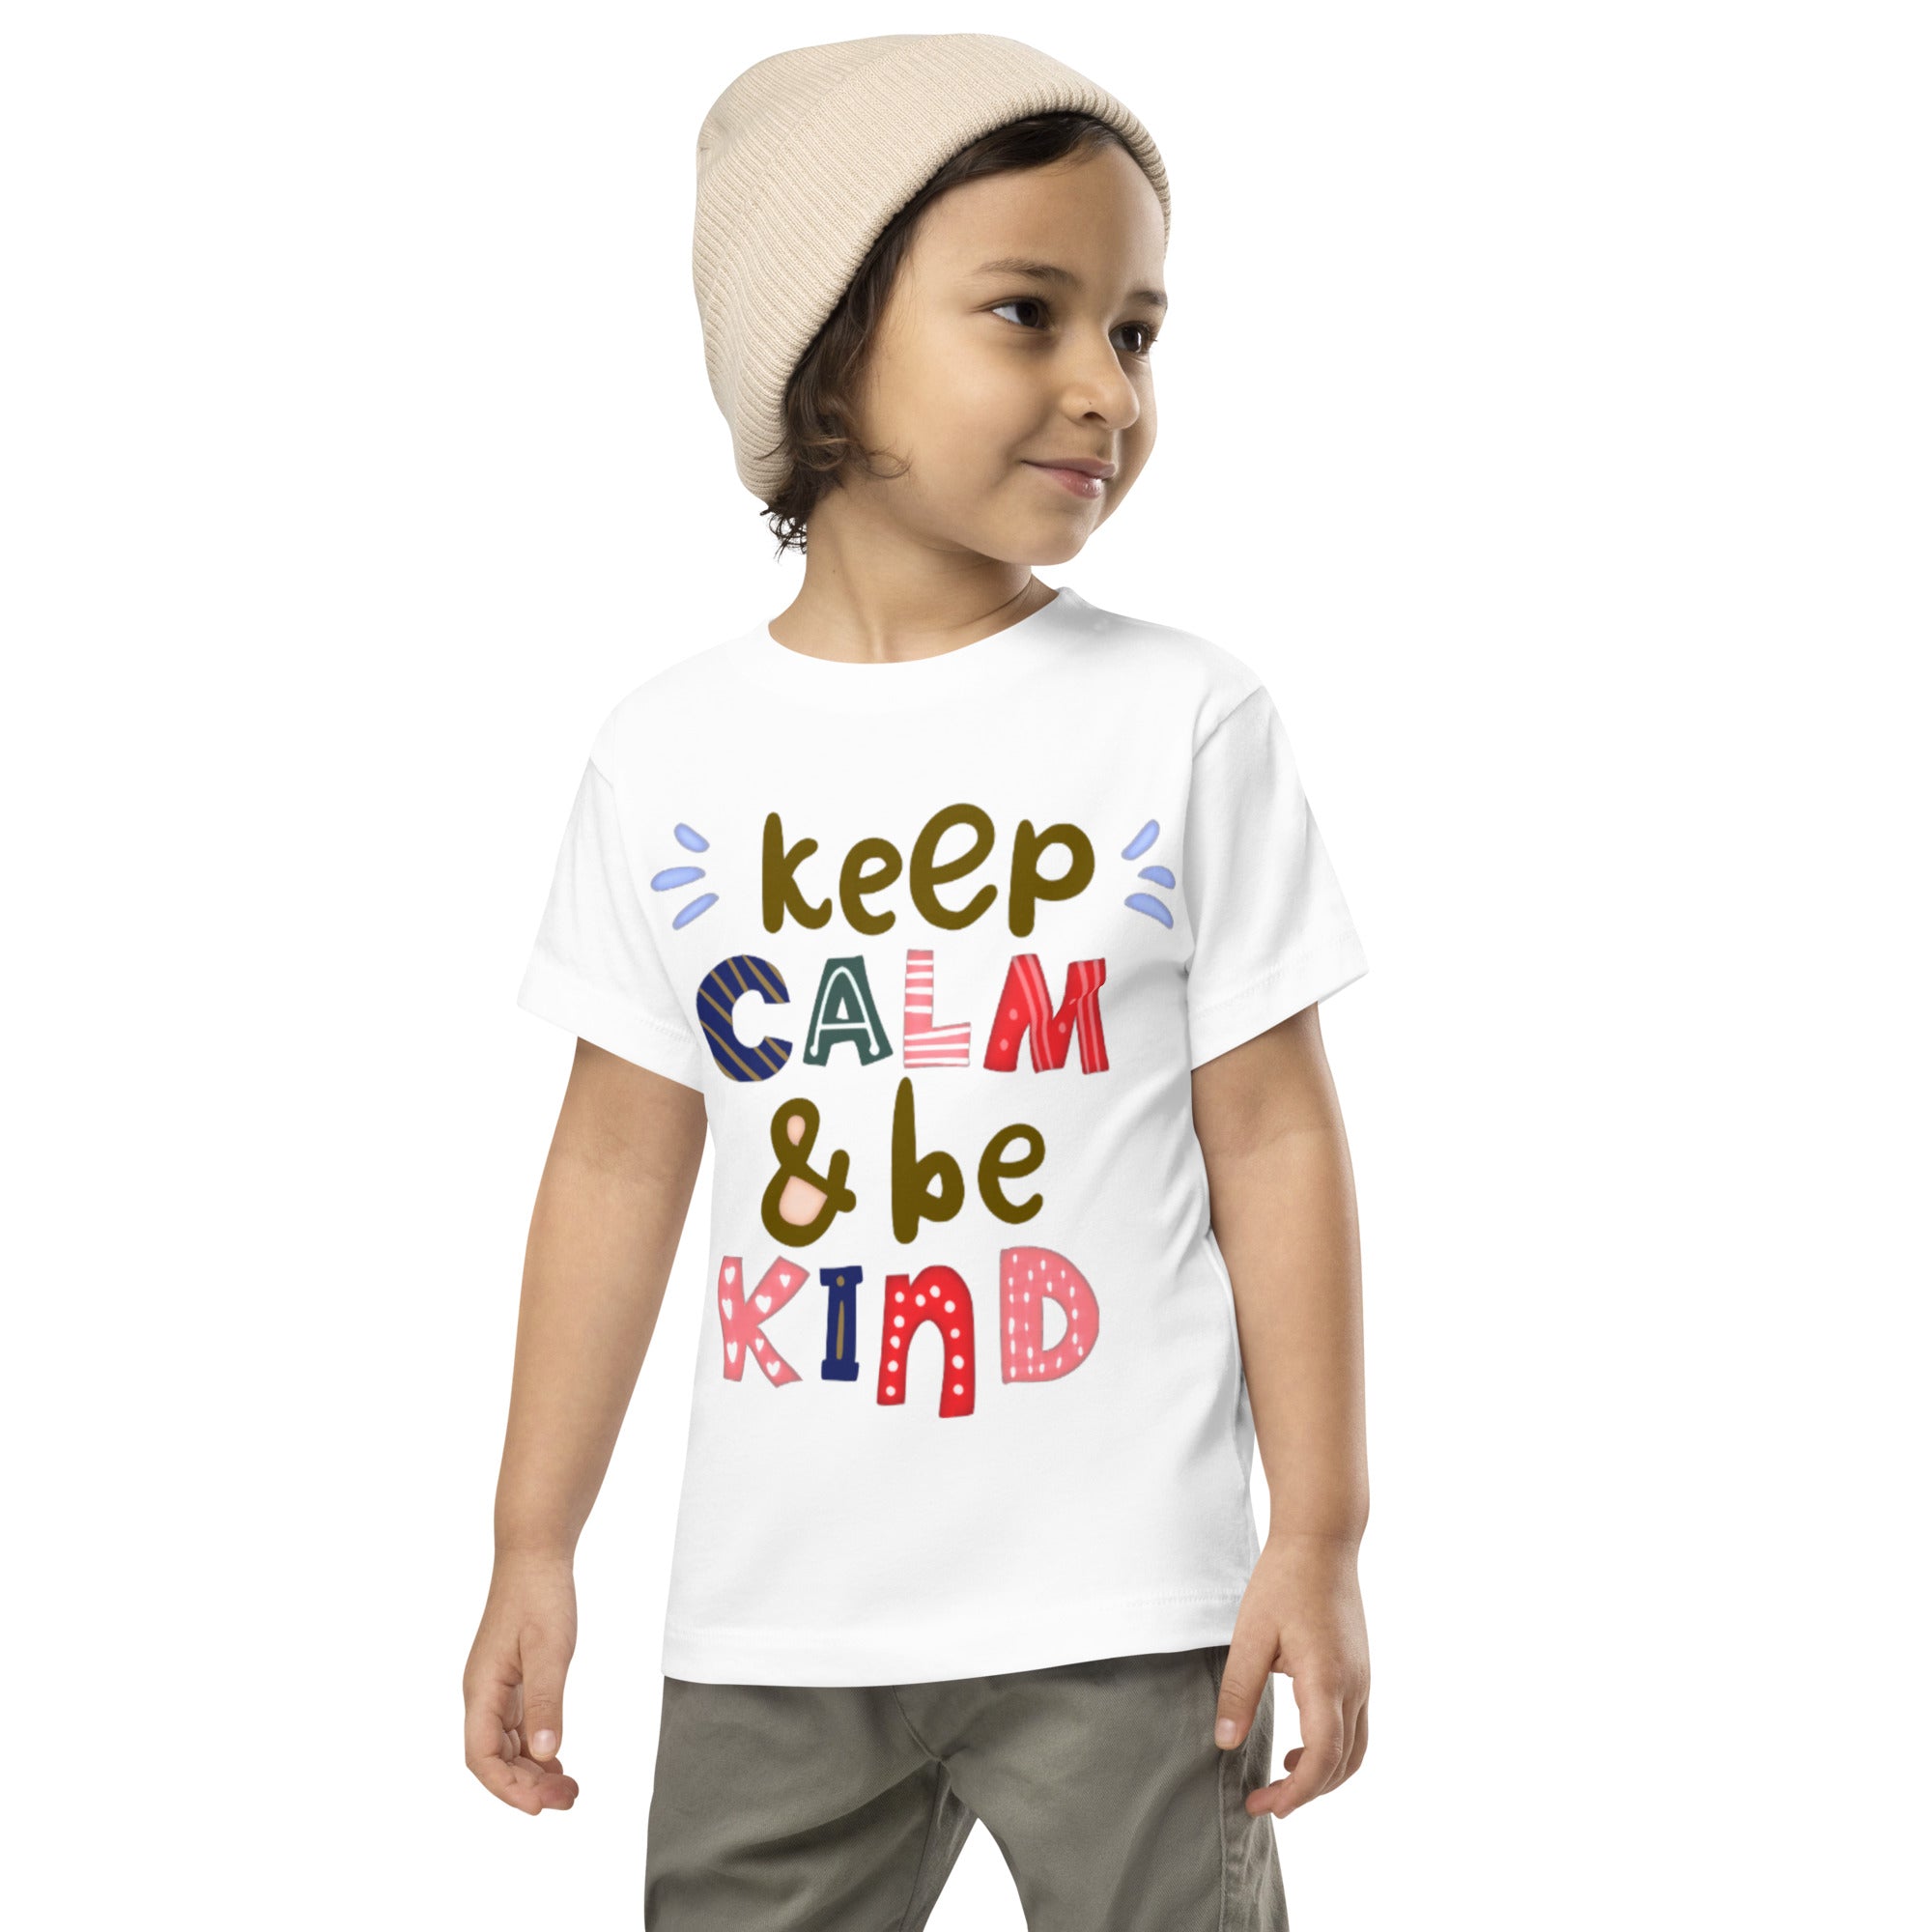 KCBK - Toddler Short Sleeve Tee